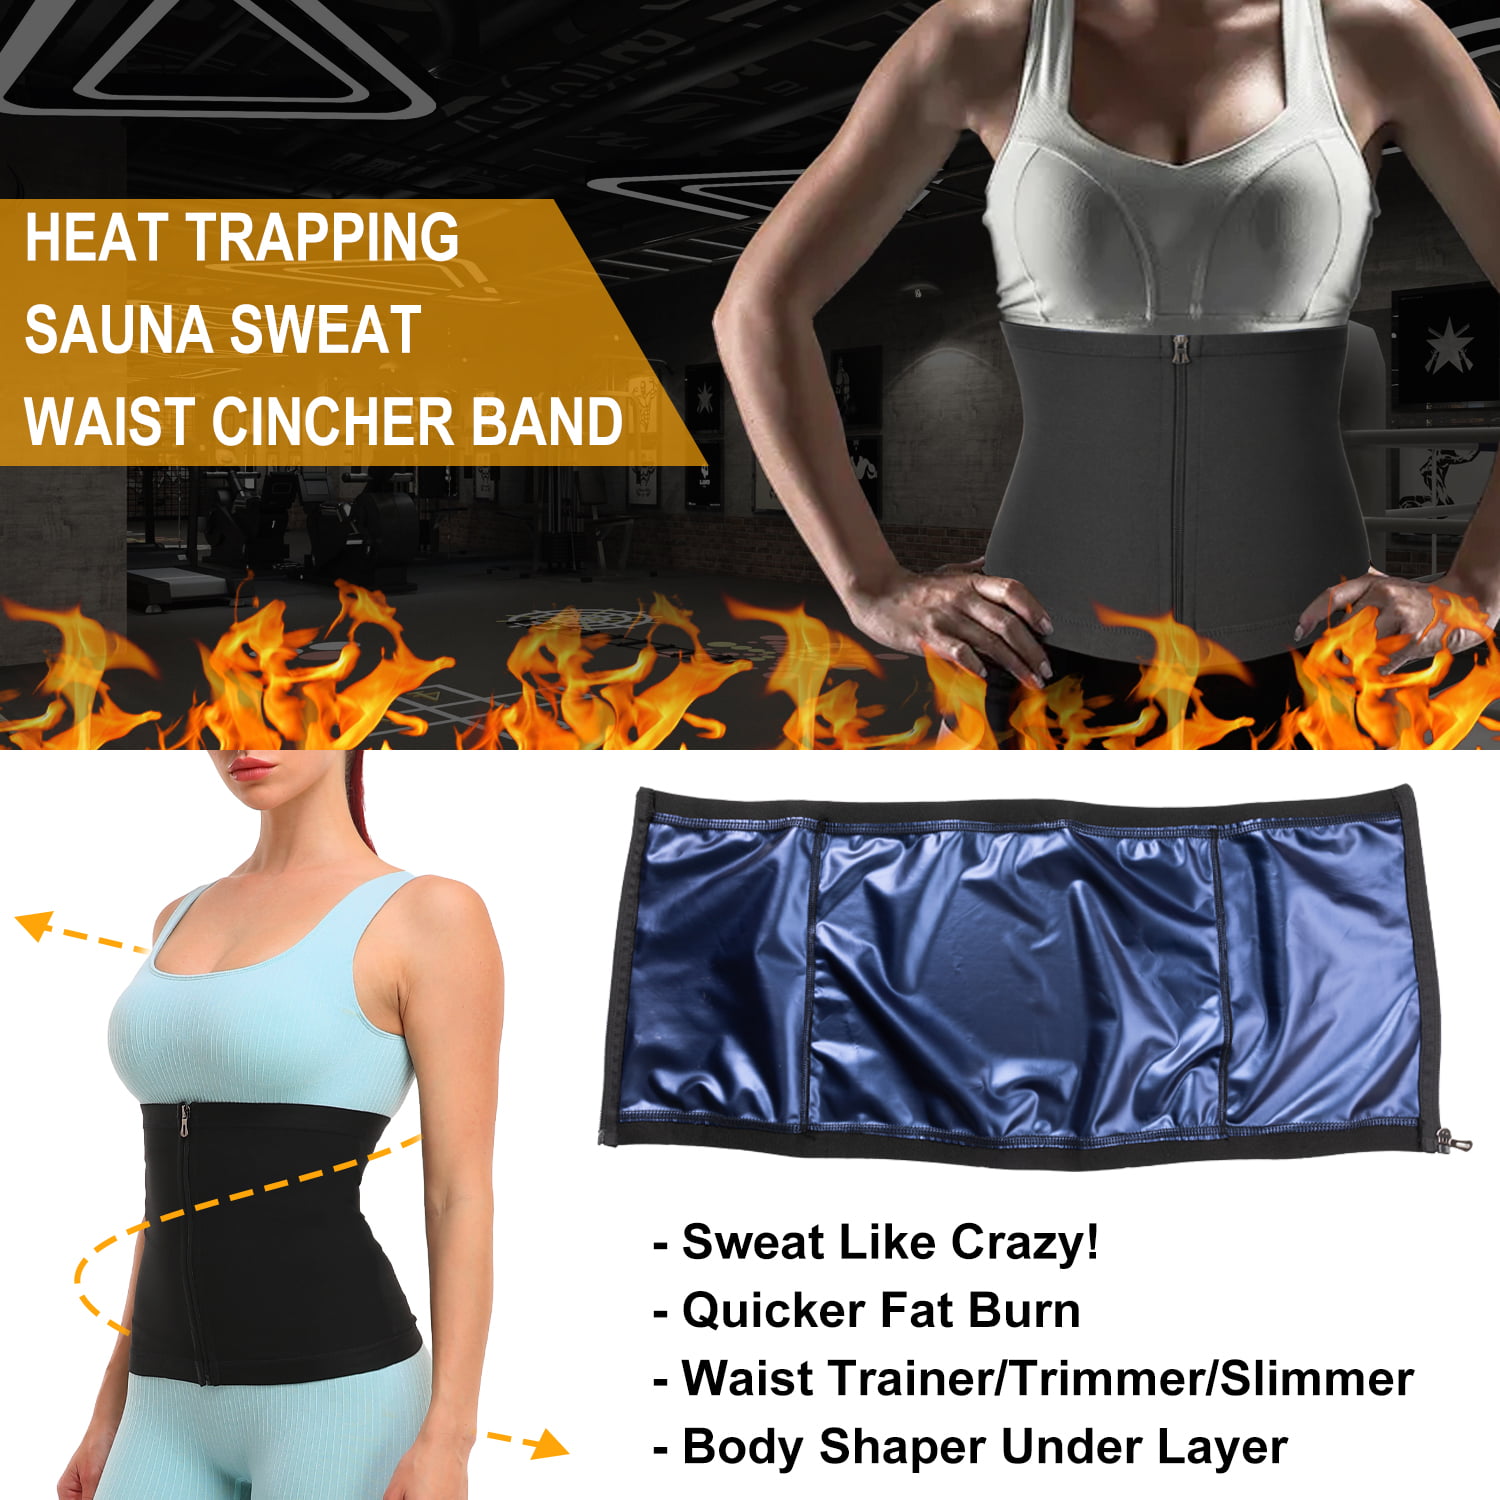  NANOHERTZ Sauna Sweat Suit Weight Loss Shapewear Pants Leggings  Pockets Waist Trainer Body Shaper Sweatsuit Fitness Gym Women Girls :  Sports & Outdoors